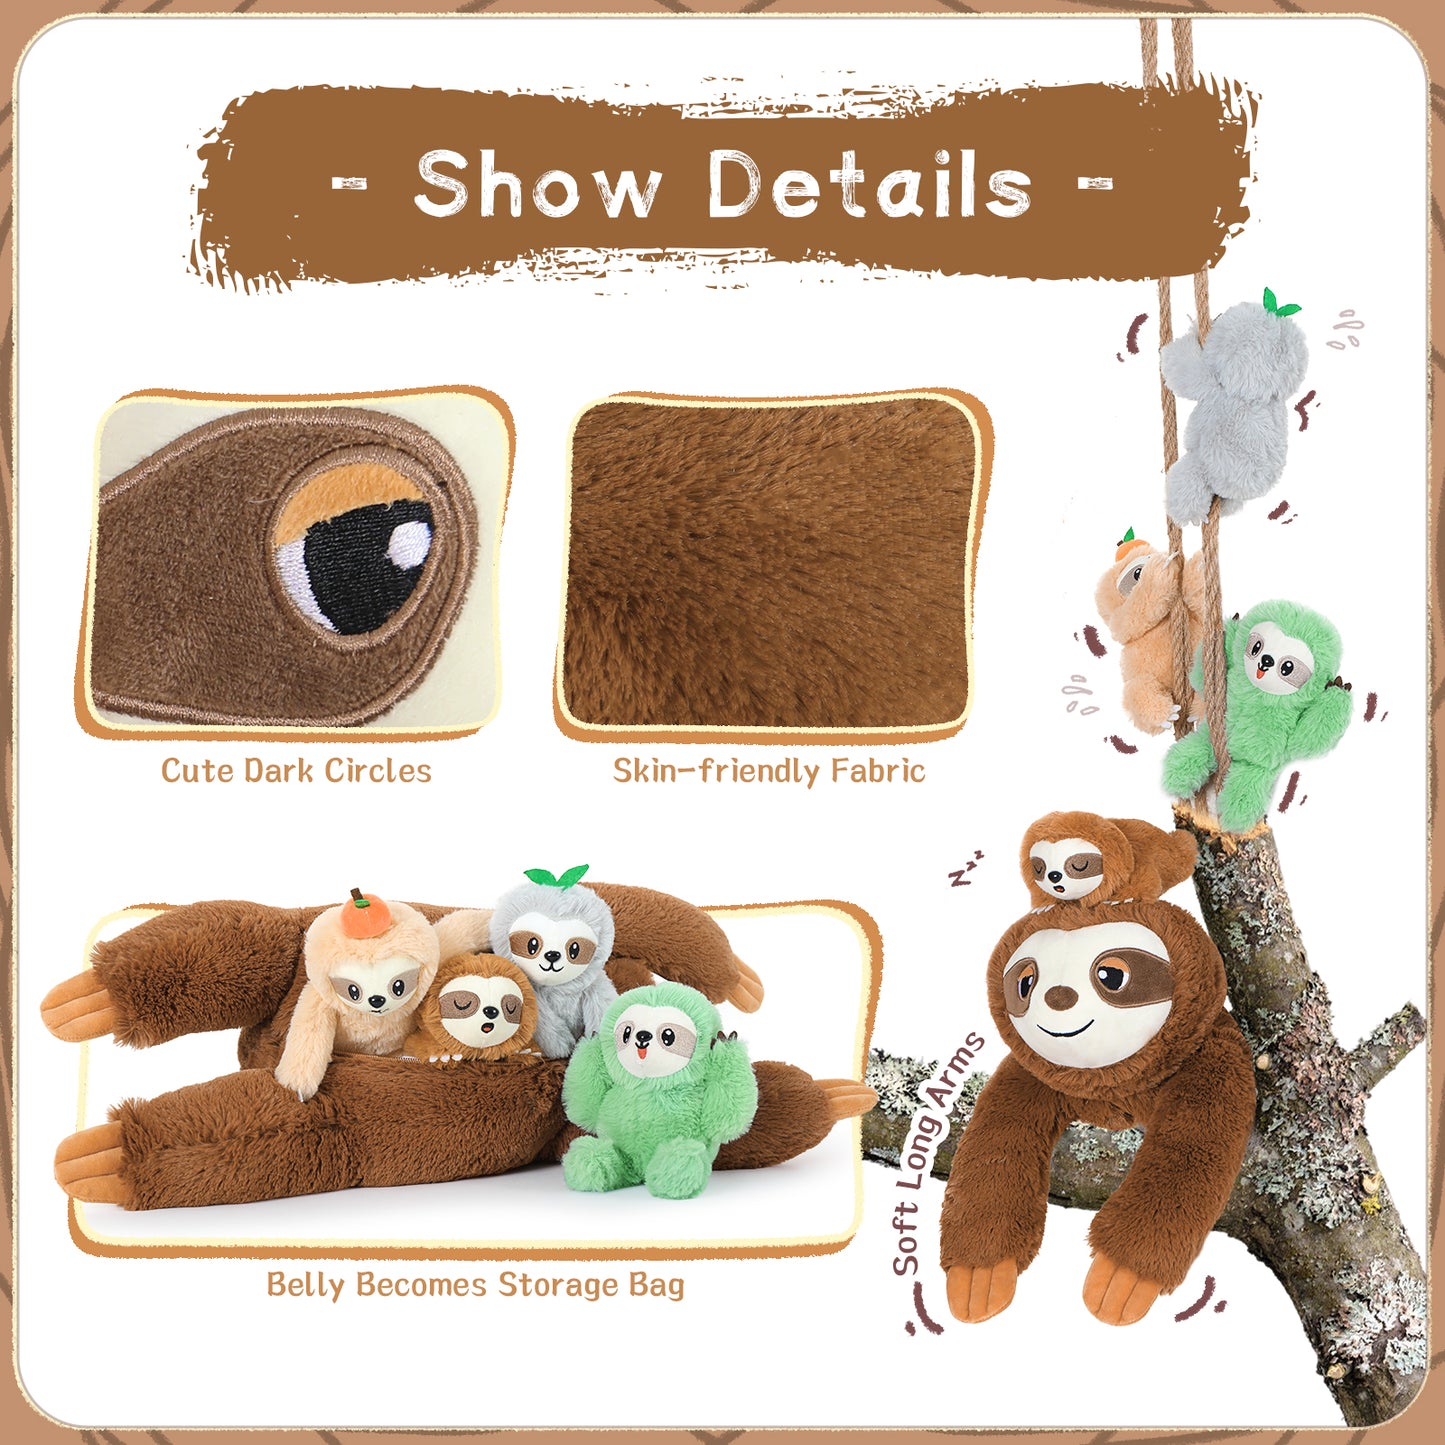 Sloth Plush Toys Sloth Stuffed Animals, 23.6 Inches - MorisMos Stuffed Animals